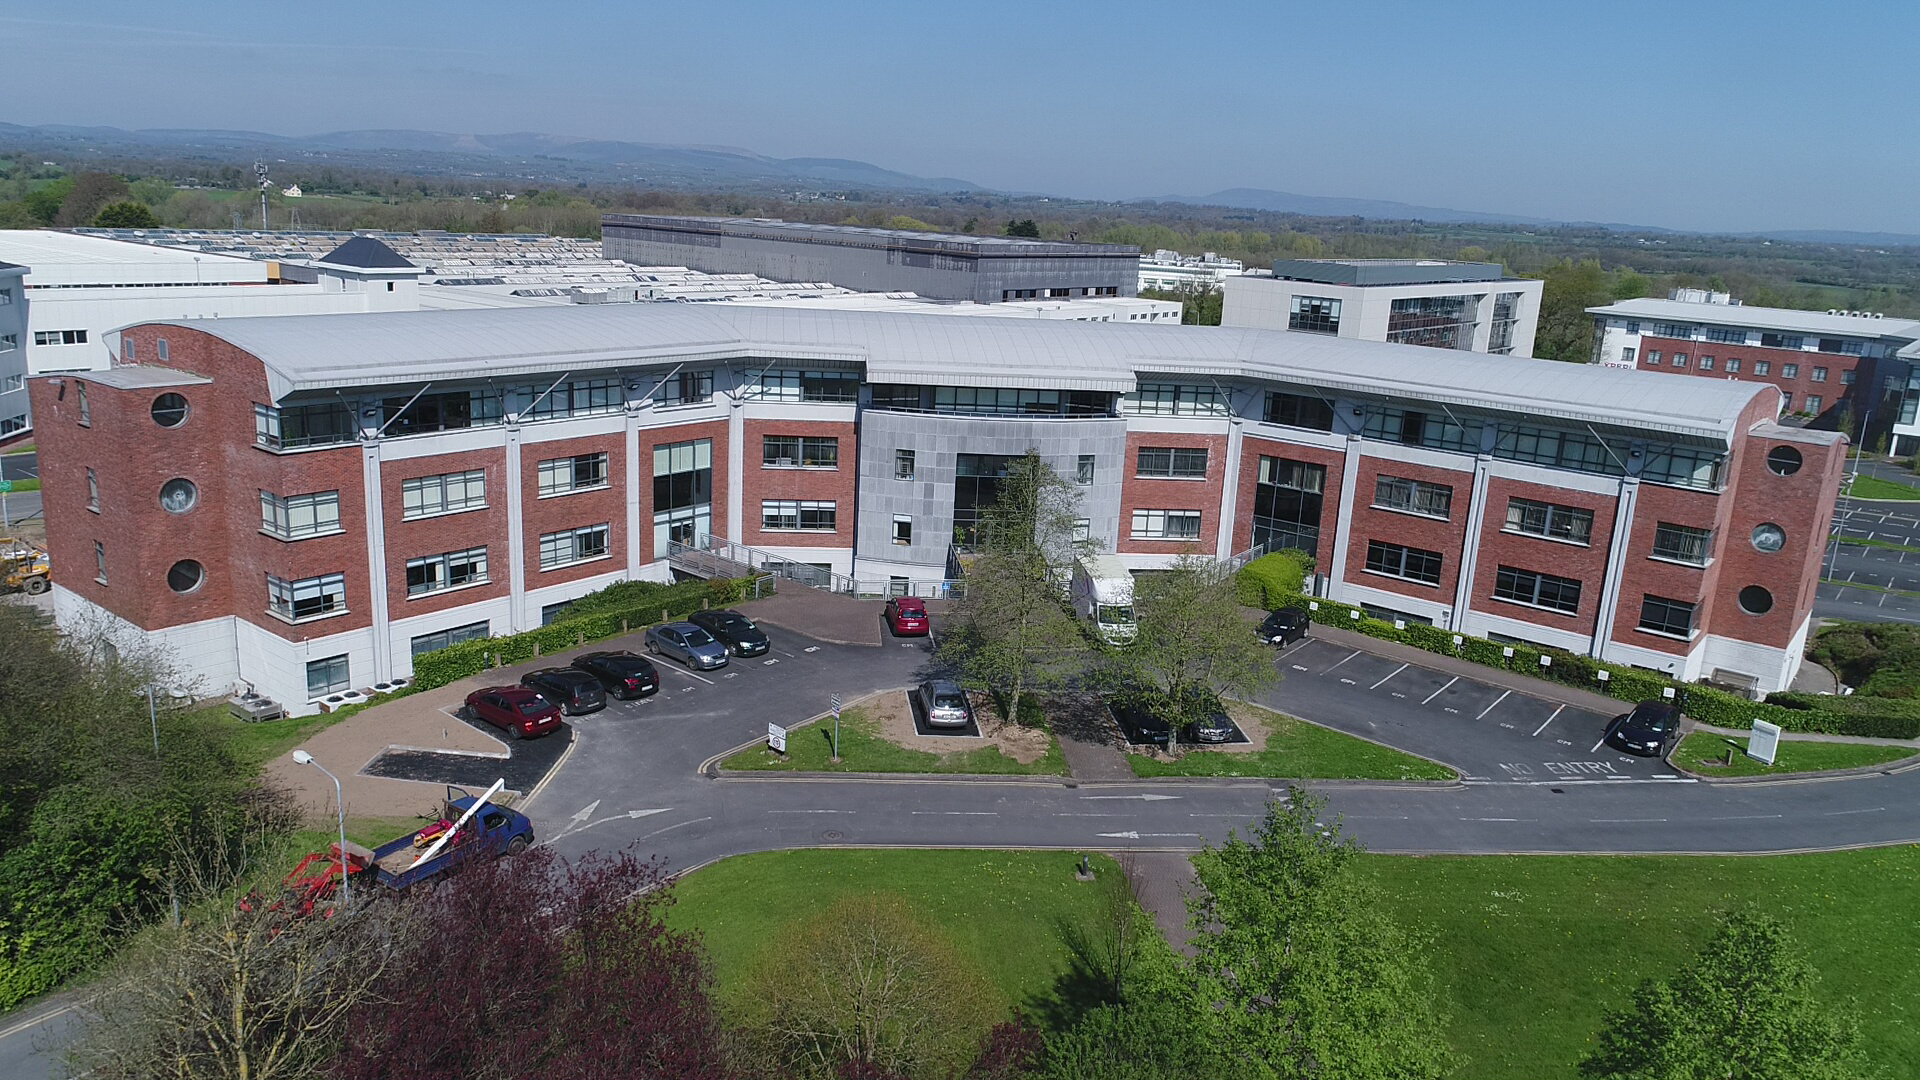 Bosch sites new R&D Centre at Limerick's Plassey Business Campus